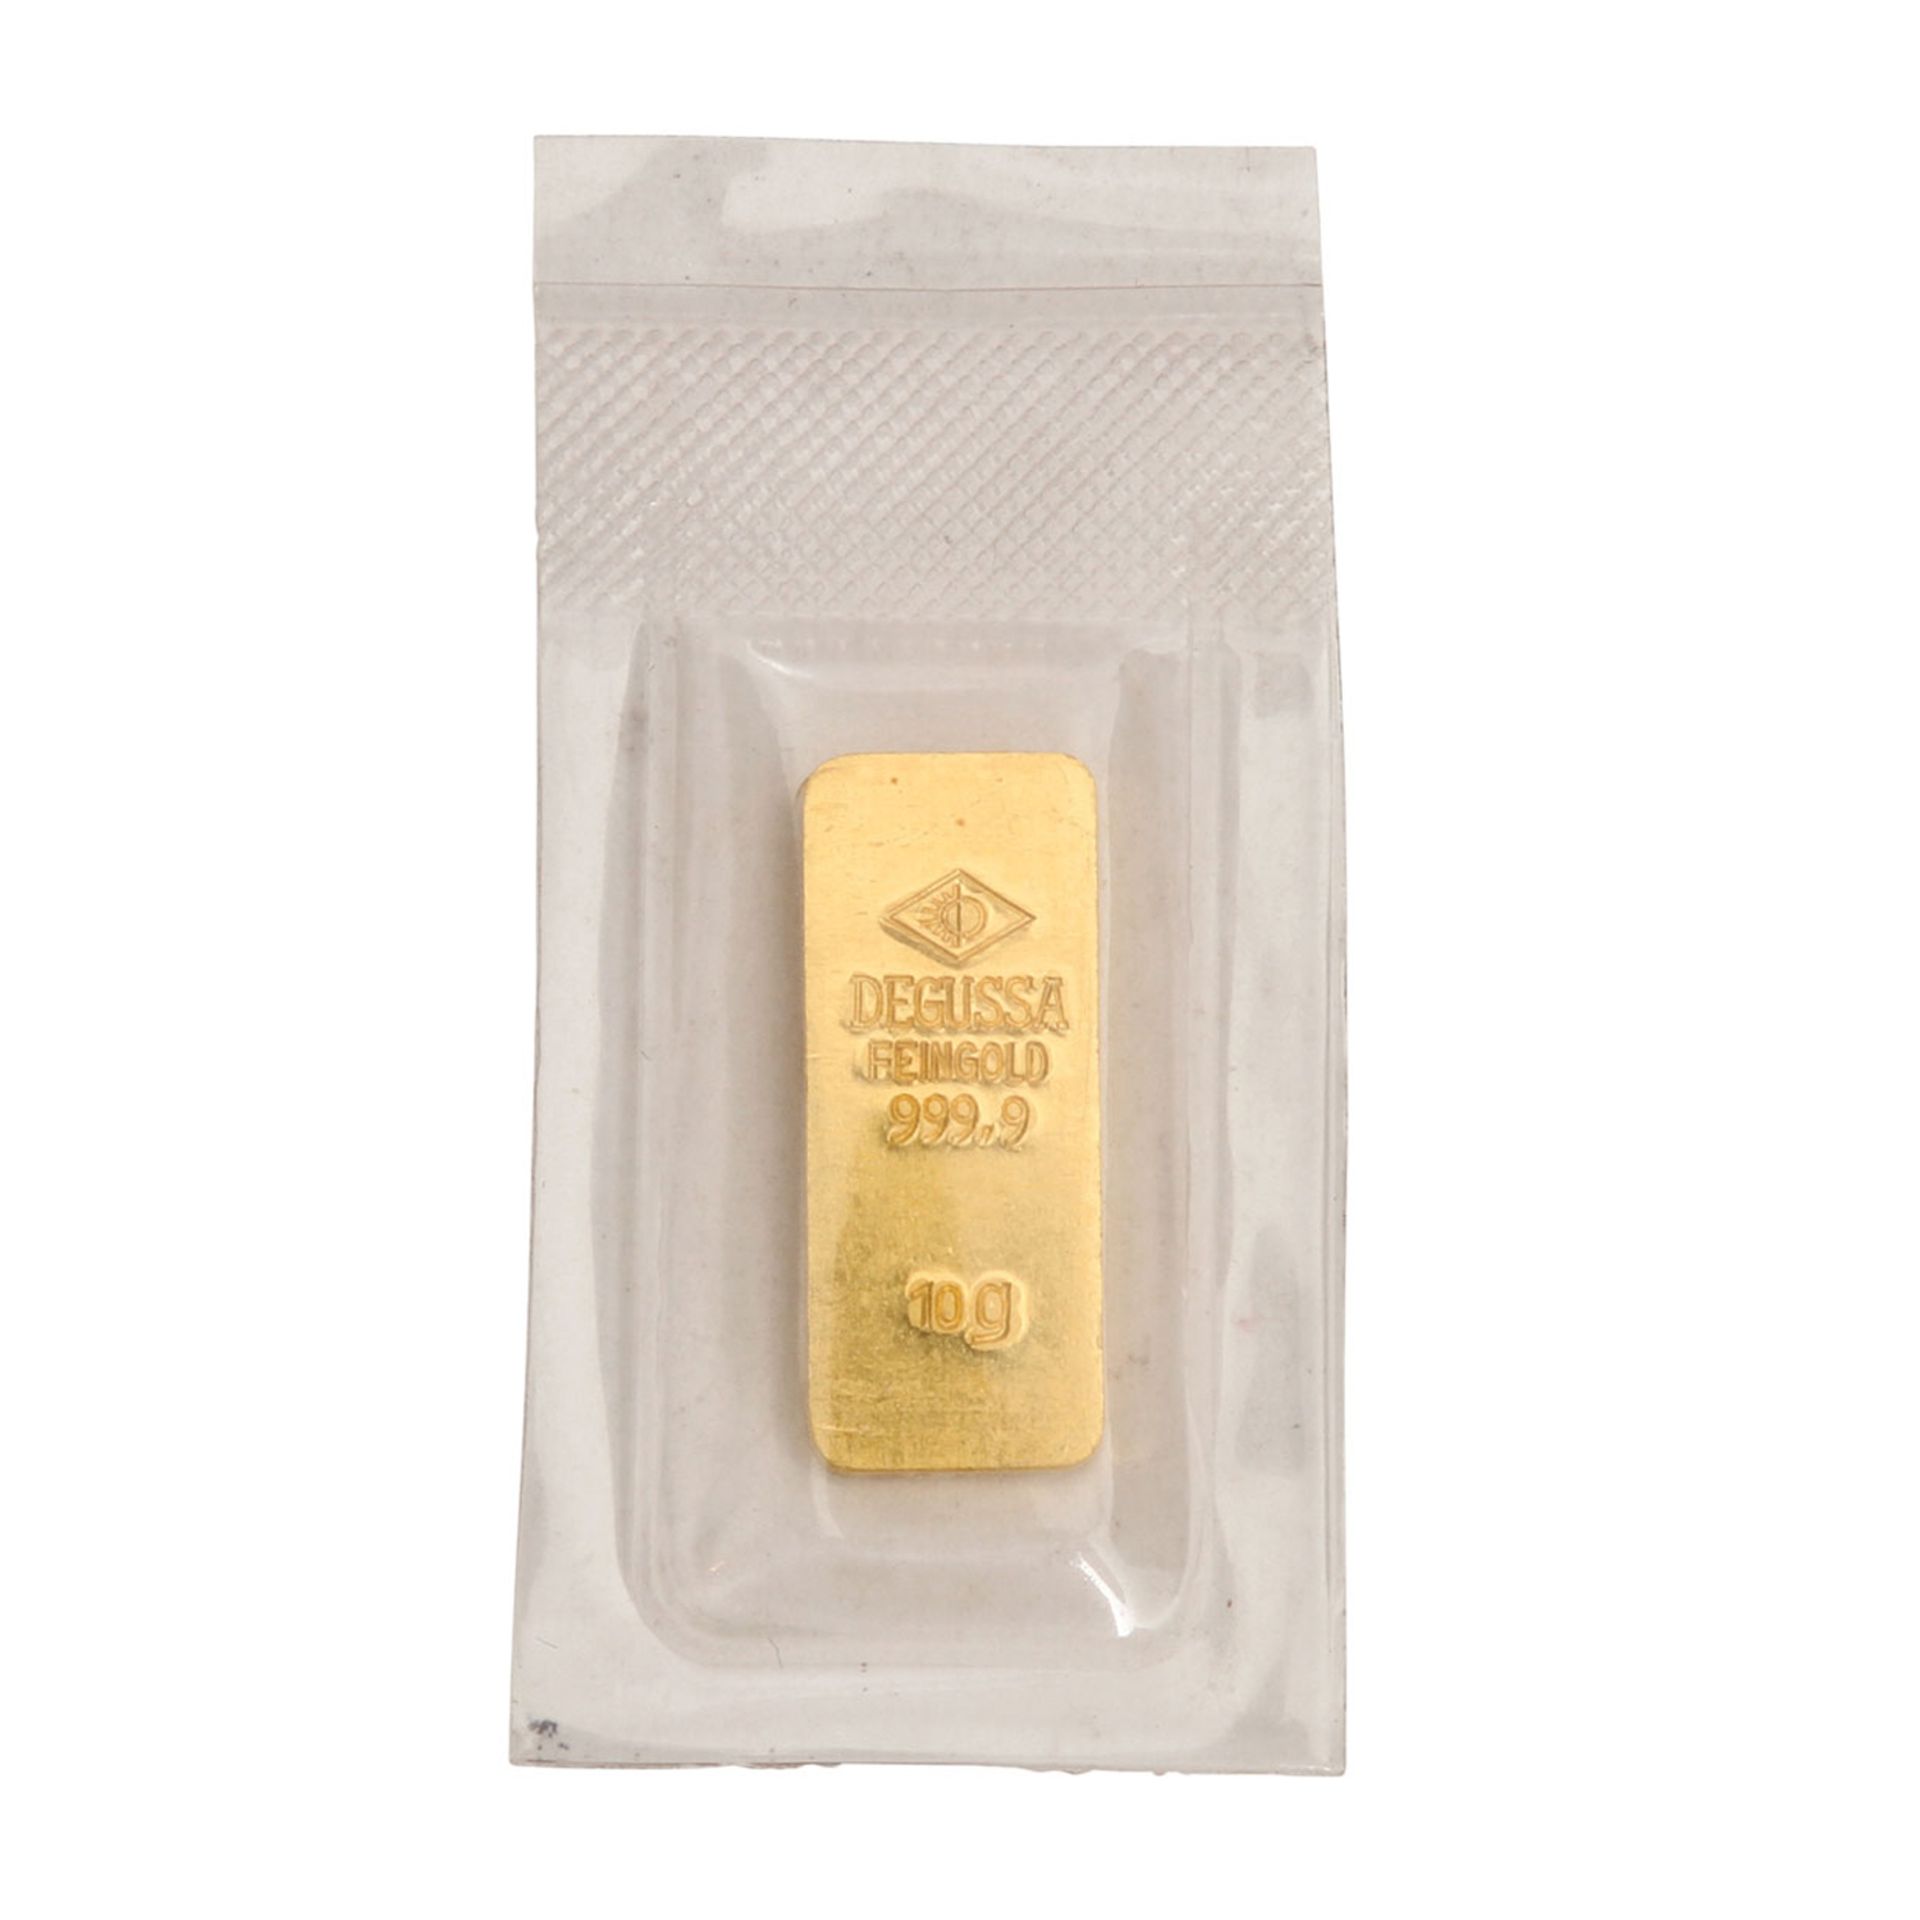 GOLDbarren - 10g GOLD fein, Goldbarren in hist. Form, Hersteller Degussa, geringe Oxidationsflecken,